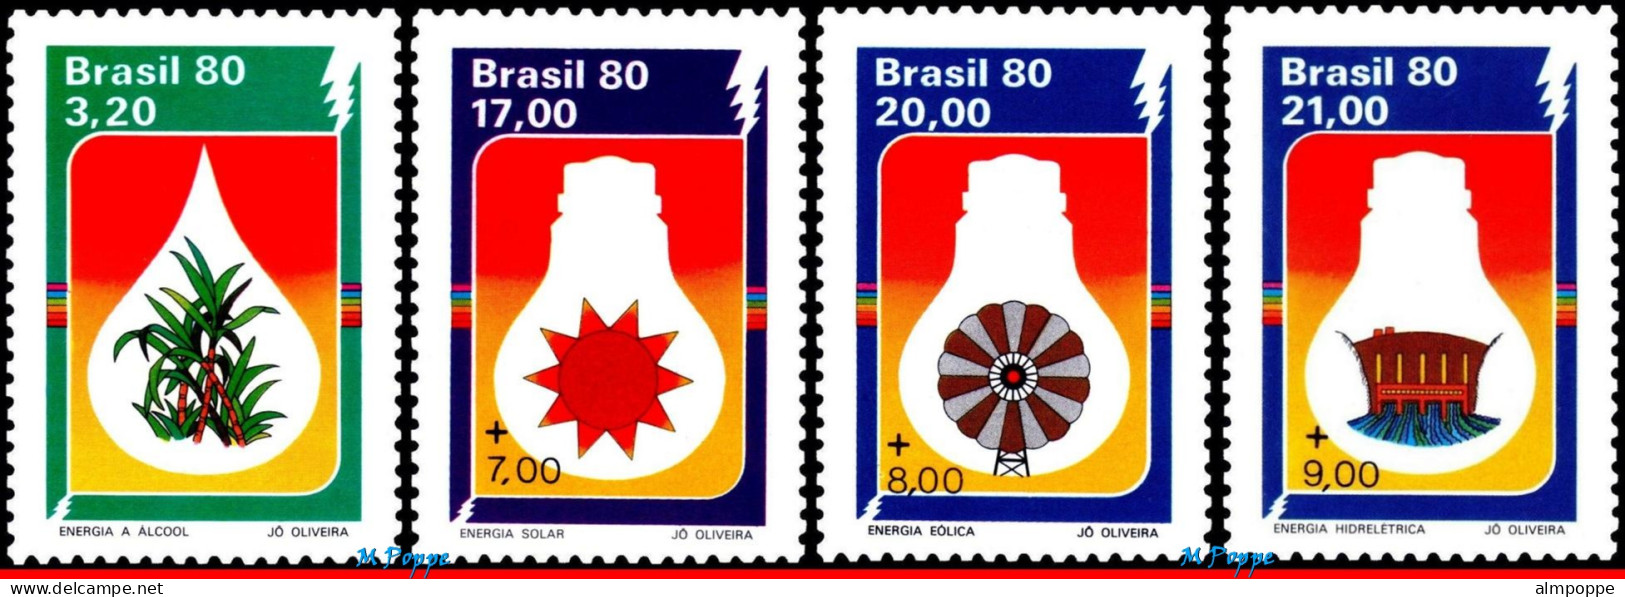 Ref. BR-1680-83 BRAZIL 1980 - ENERGY ALTERNATIVES,ALCOHOL, SOLAR, WIND, HYDRO, SET MNH, SCIENCE 4V Sc# 1680-83 - Water